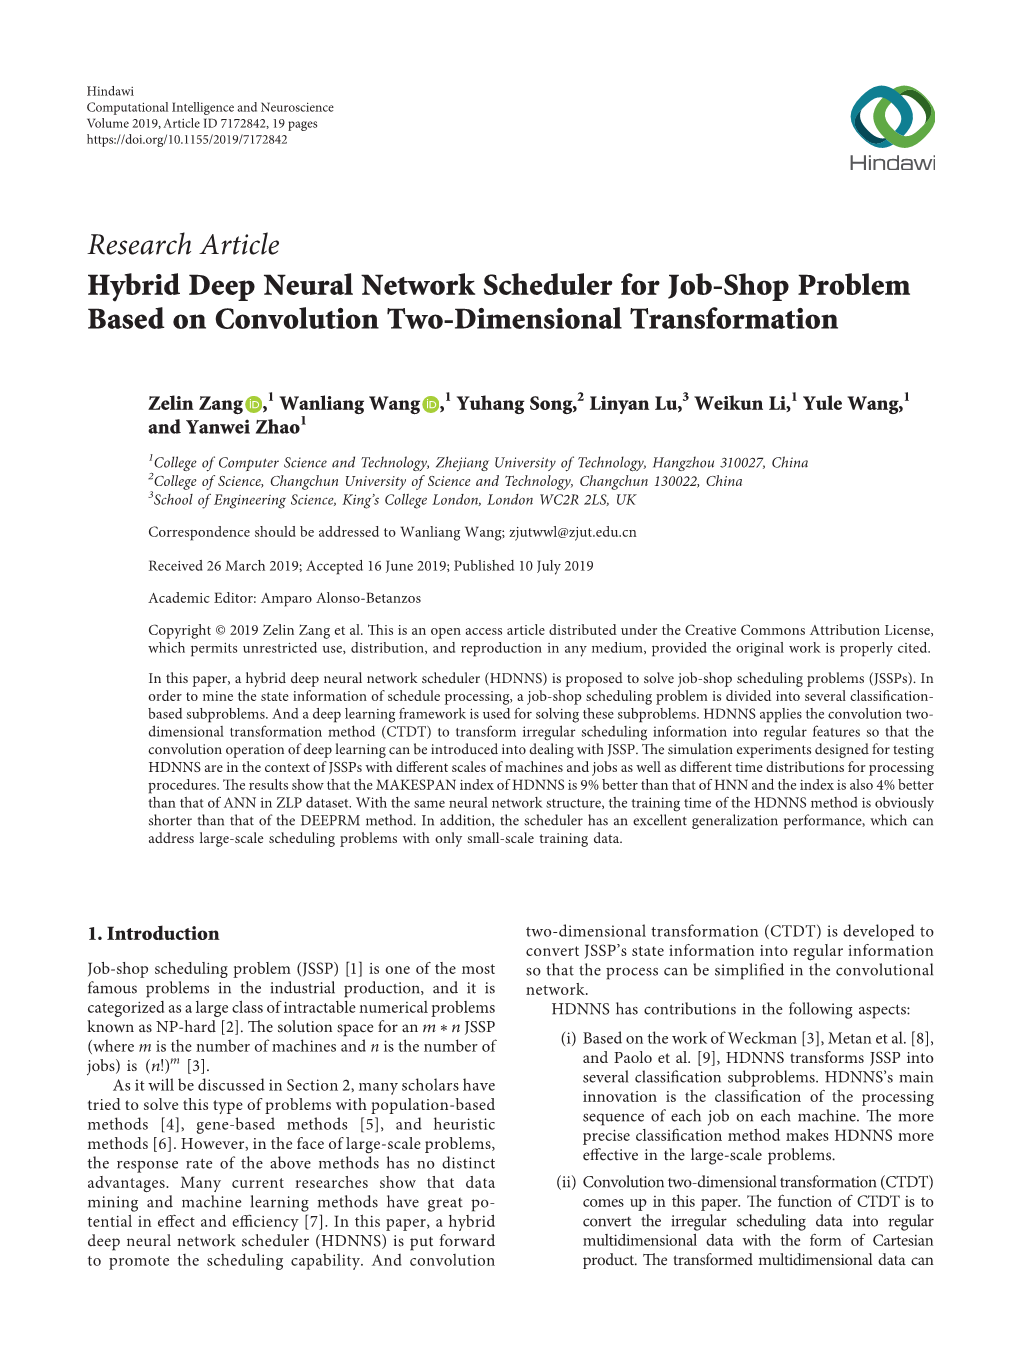 Hybrid Deep Neural Network Scheduler for Job-Shop Problem Based on Convolution Two-Dimensional Transformation